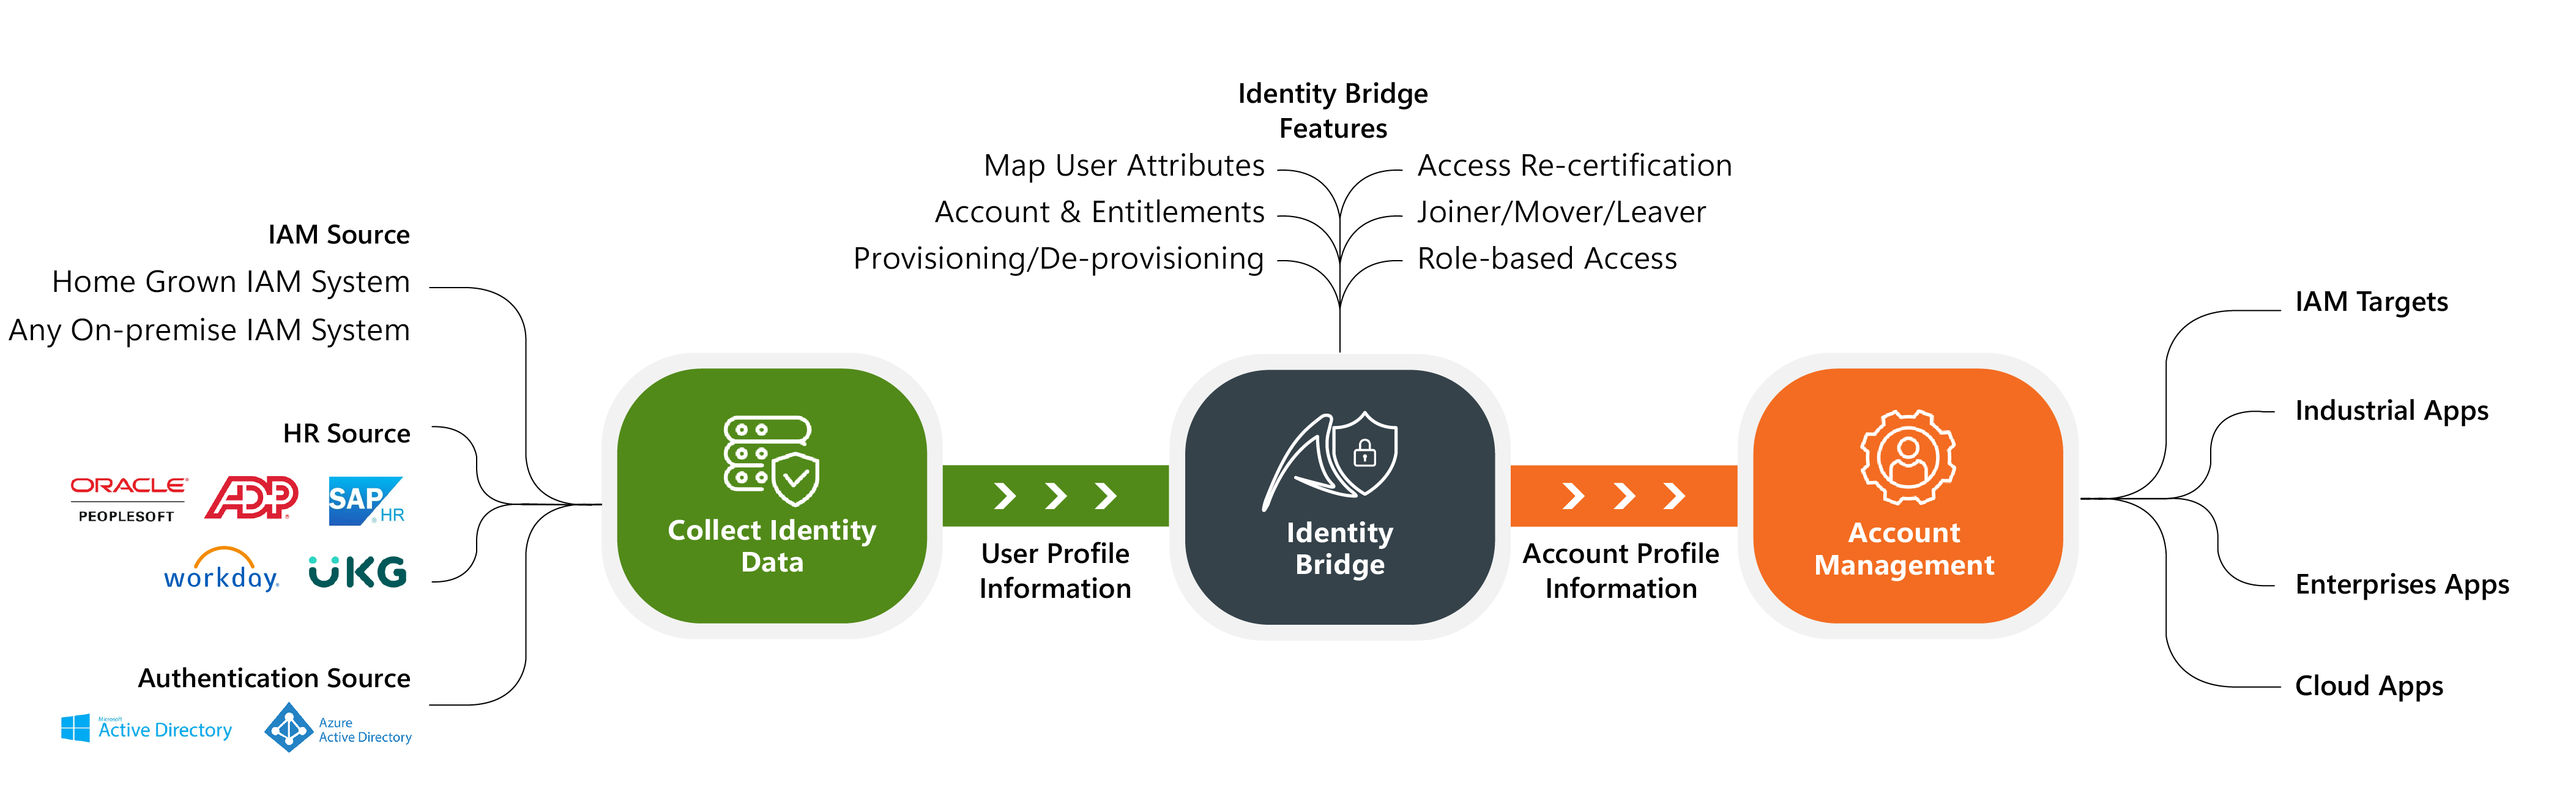 Identity Bridge Process Diagram